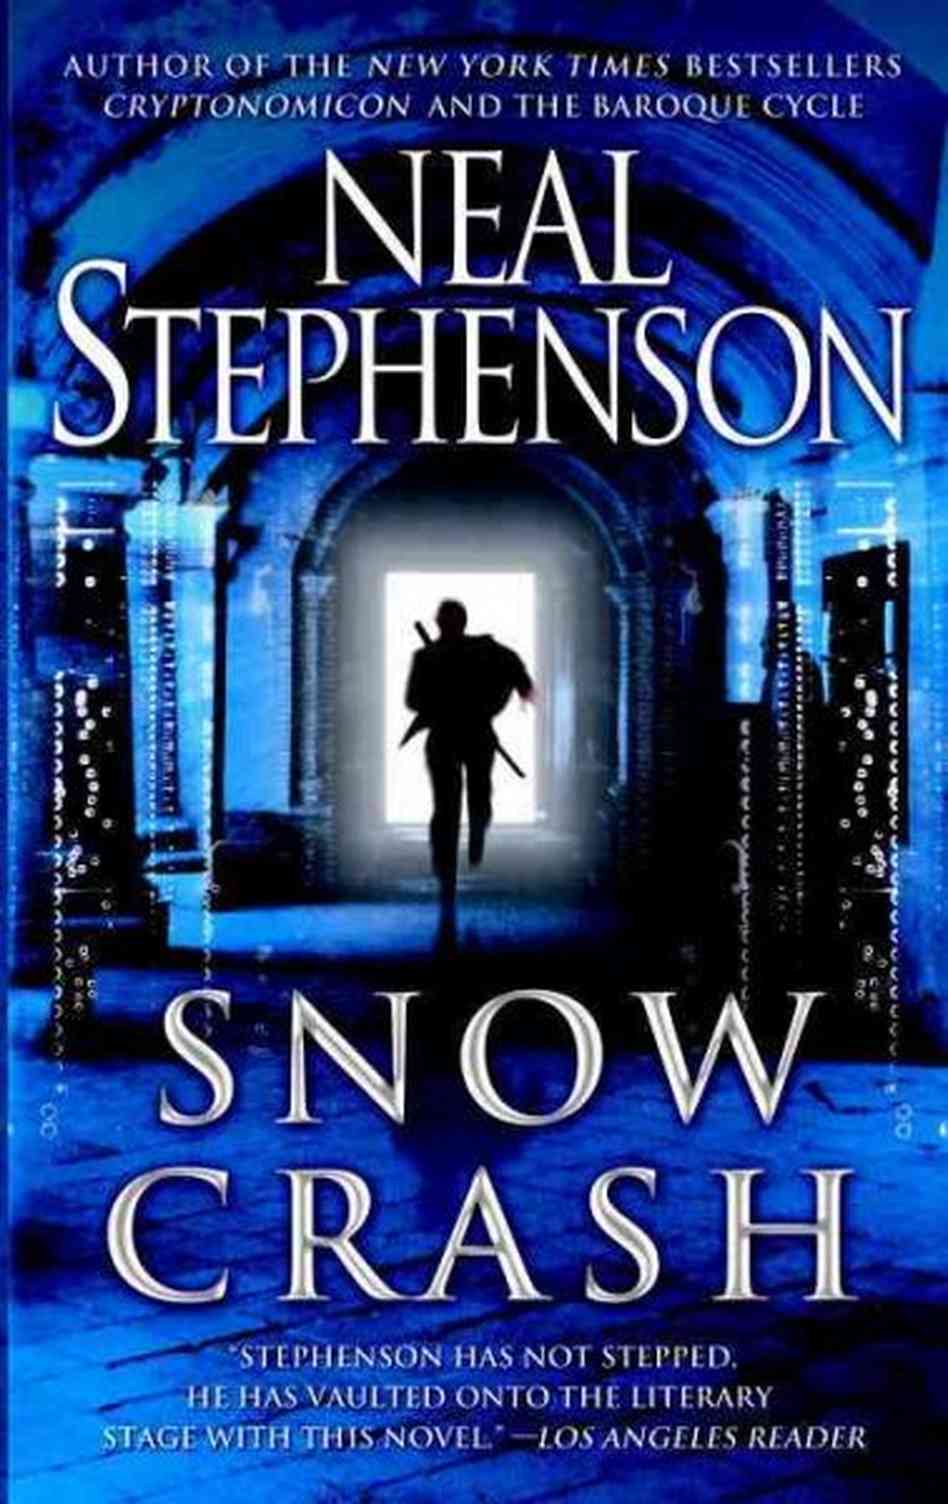 Libro de audio Snow Crash – Neal Stephenson